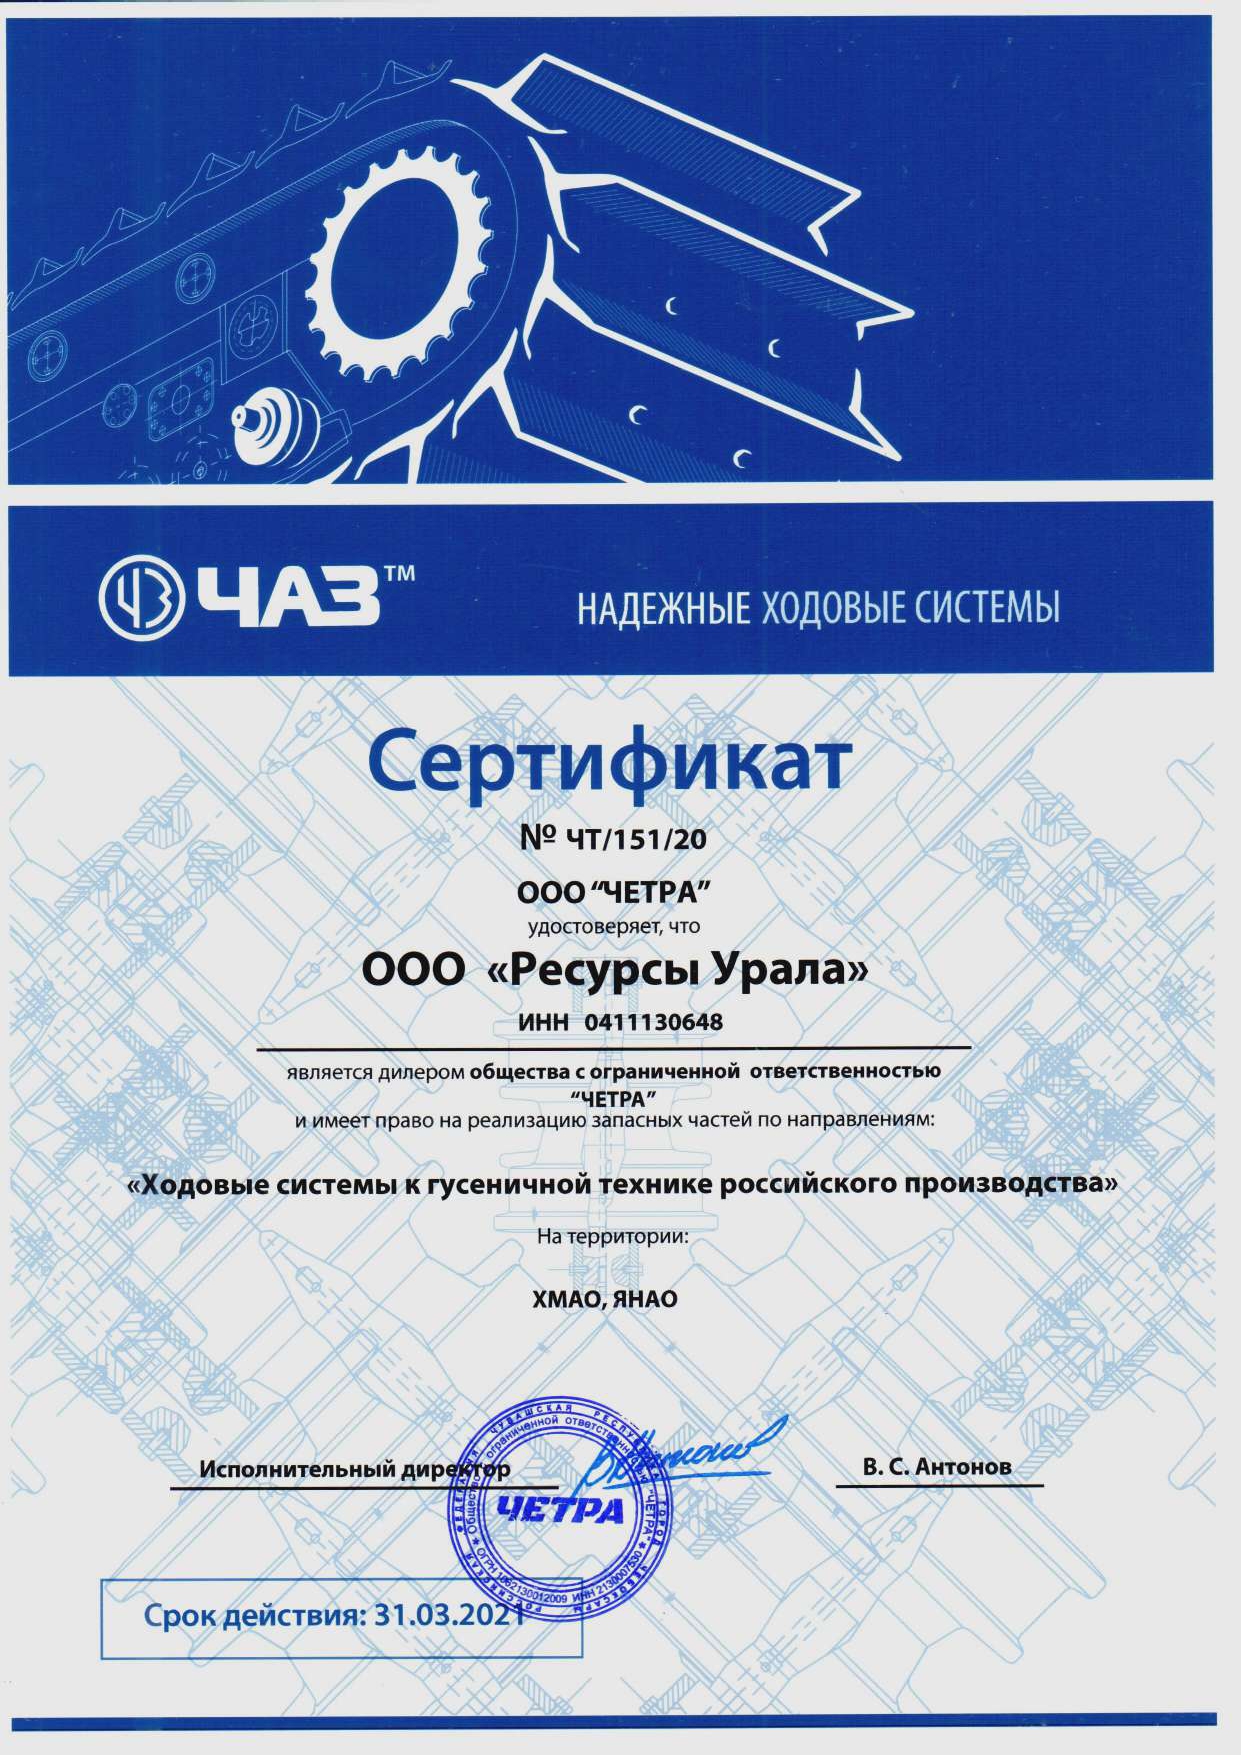 Сертификат ЧАЗ